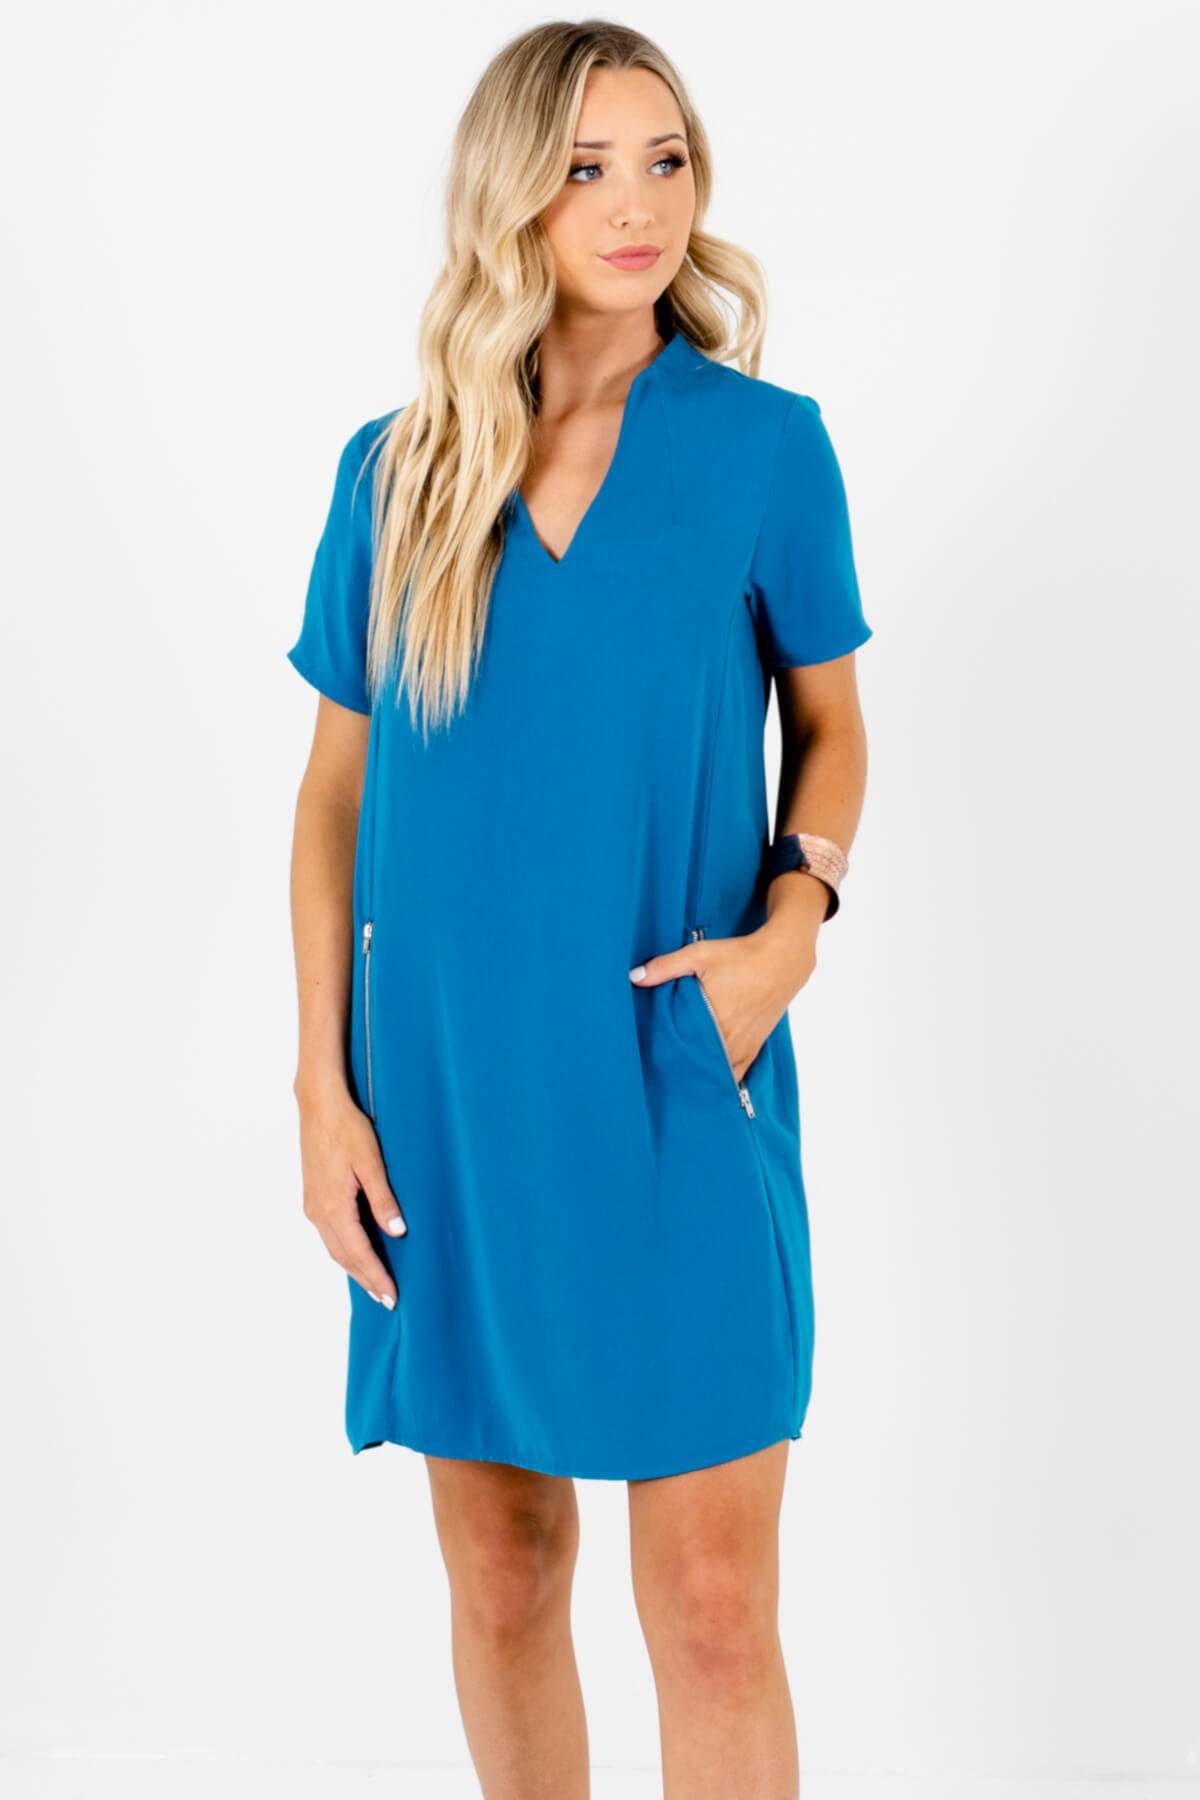 Blue Boutique Mini Dresses with Zipper Back and Zipper Pockets